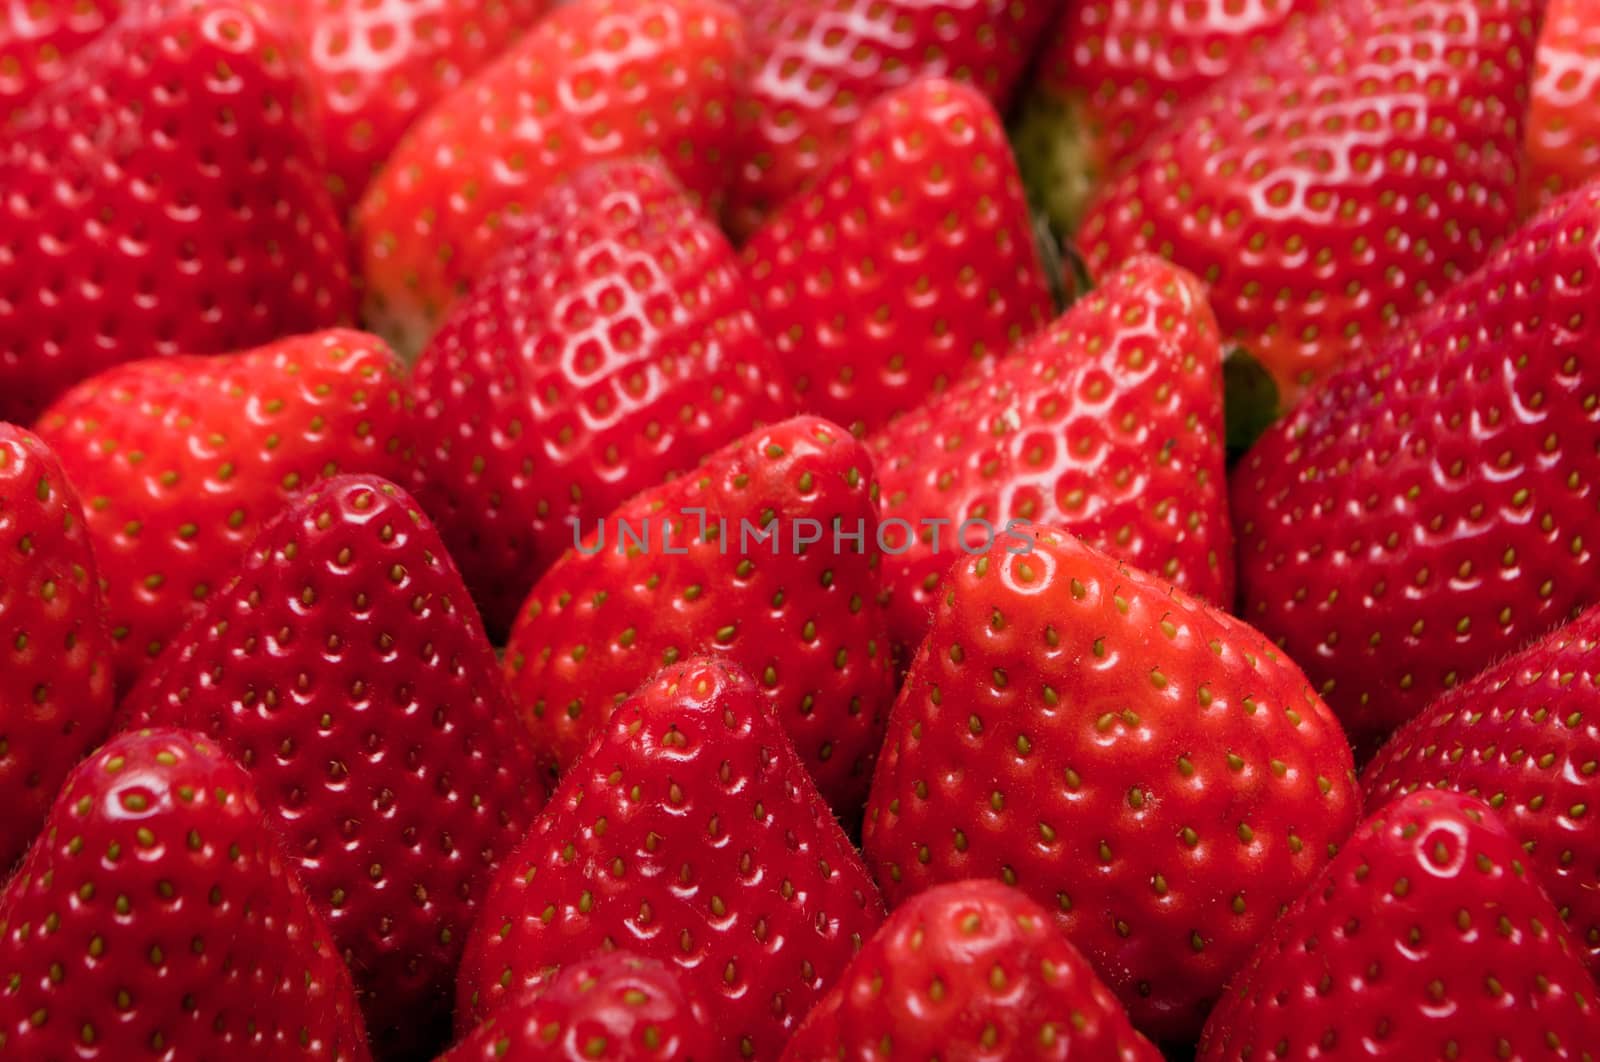 Strawberries by NeydtStock